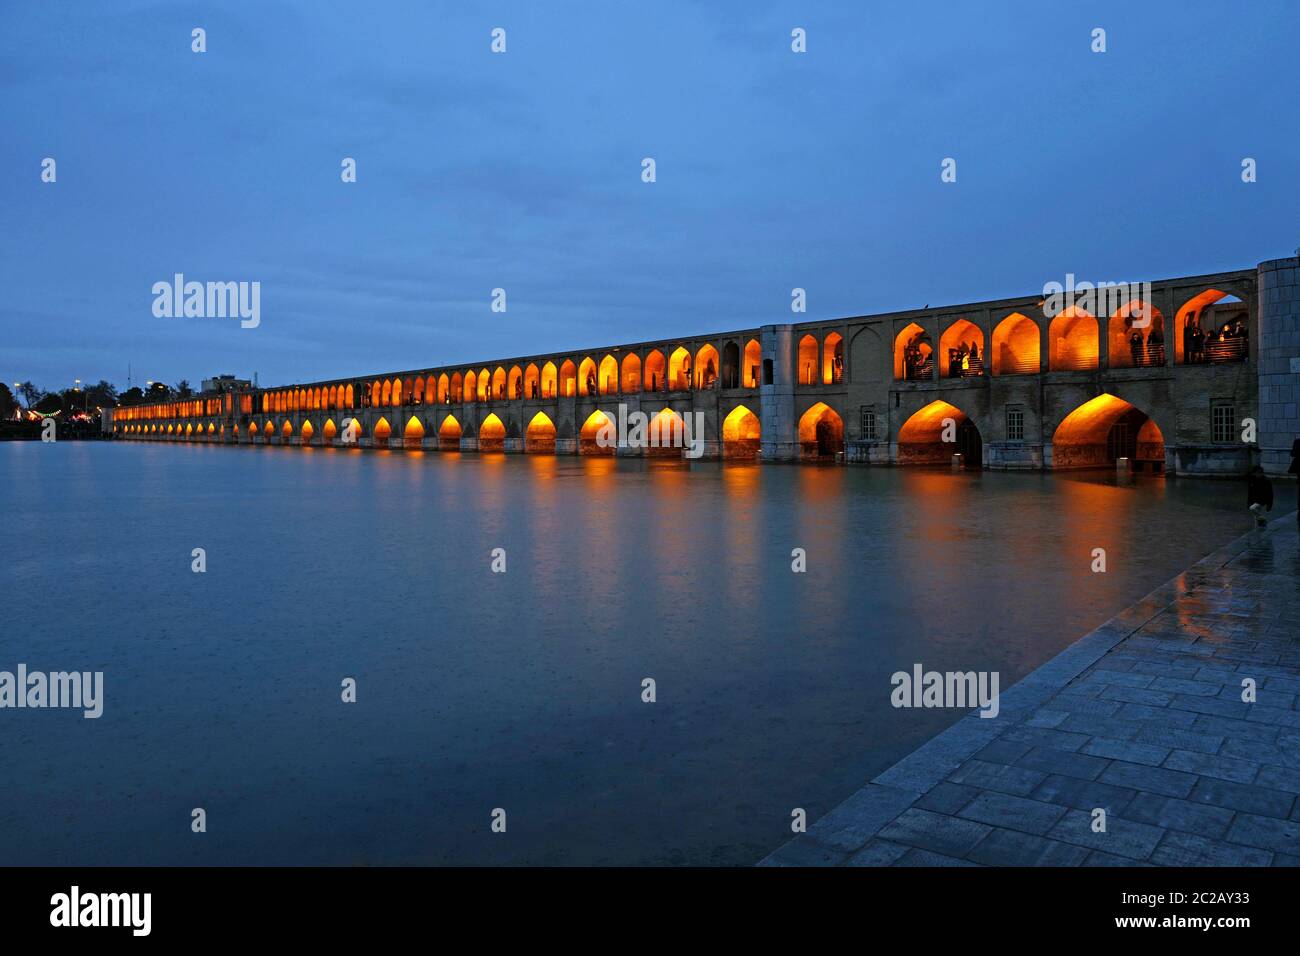 Golden night lights on Khaju bridge, in Isfahan, Iran. Stock Photo